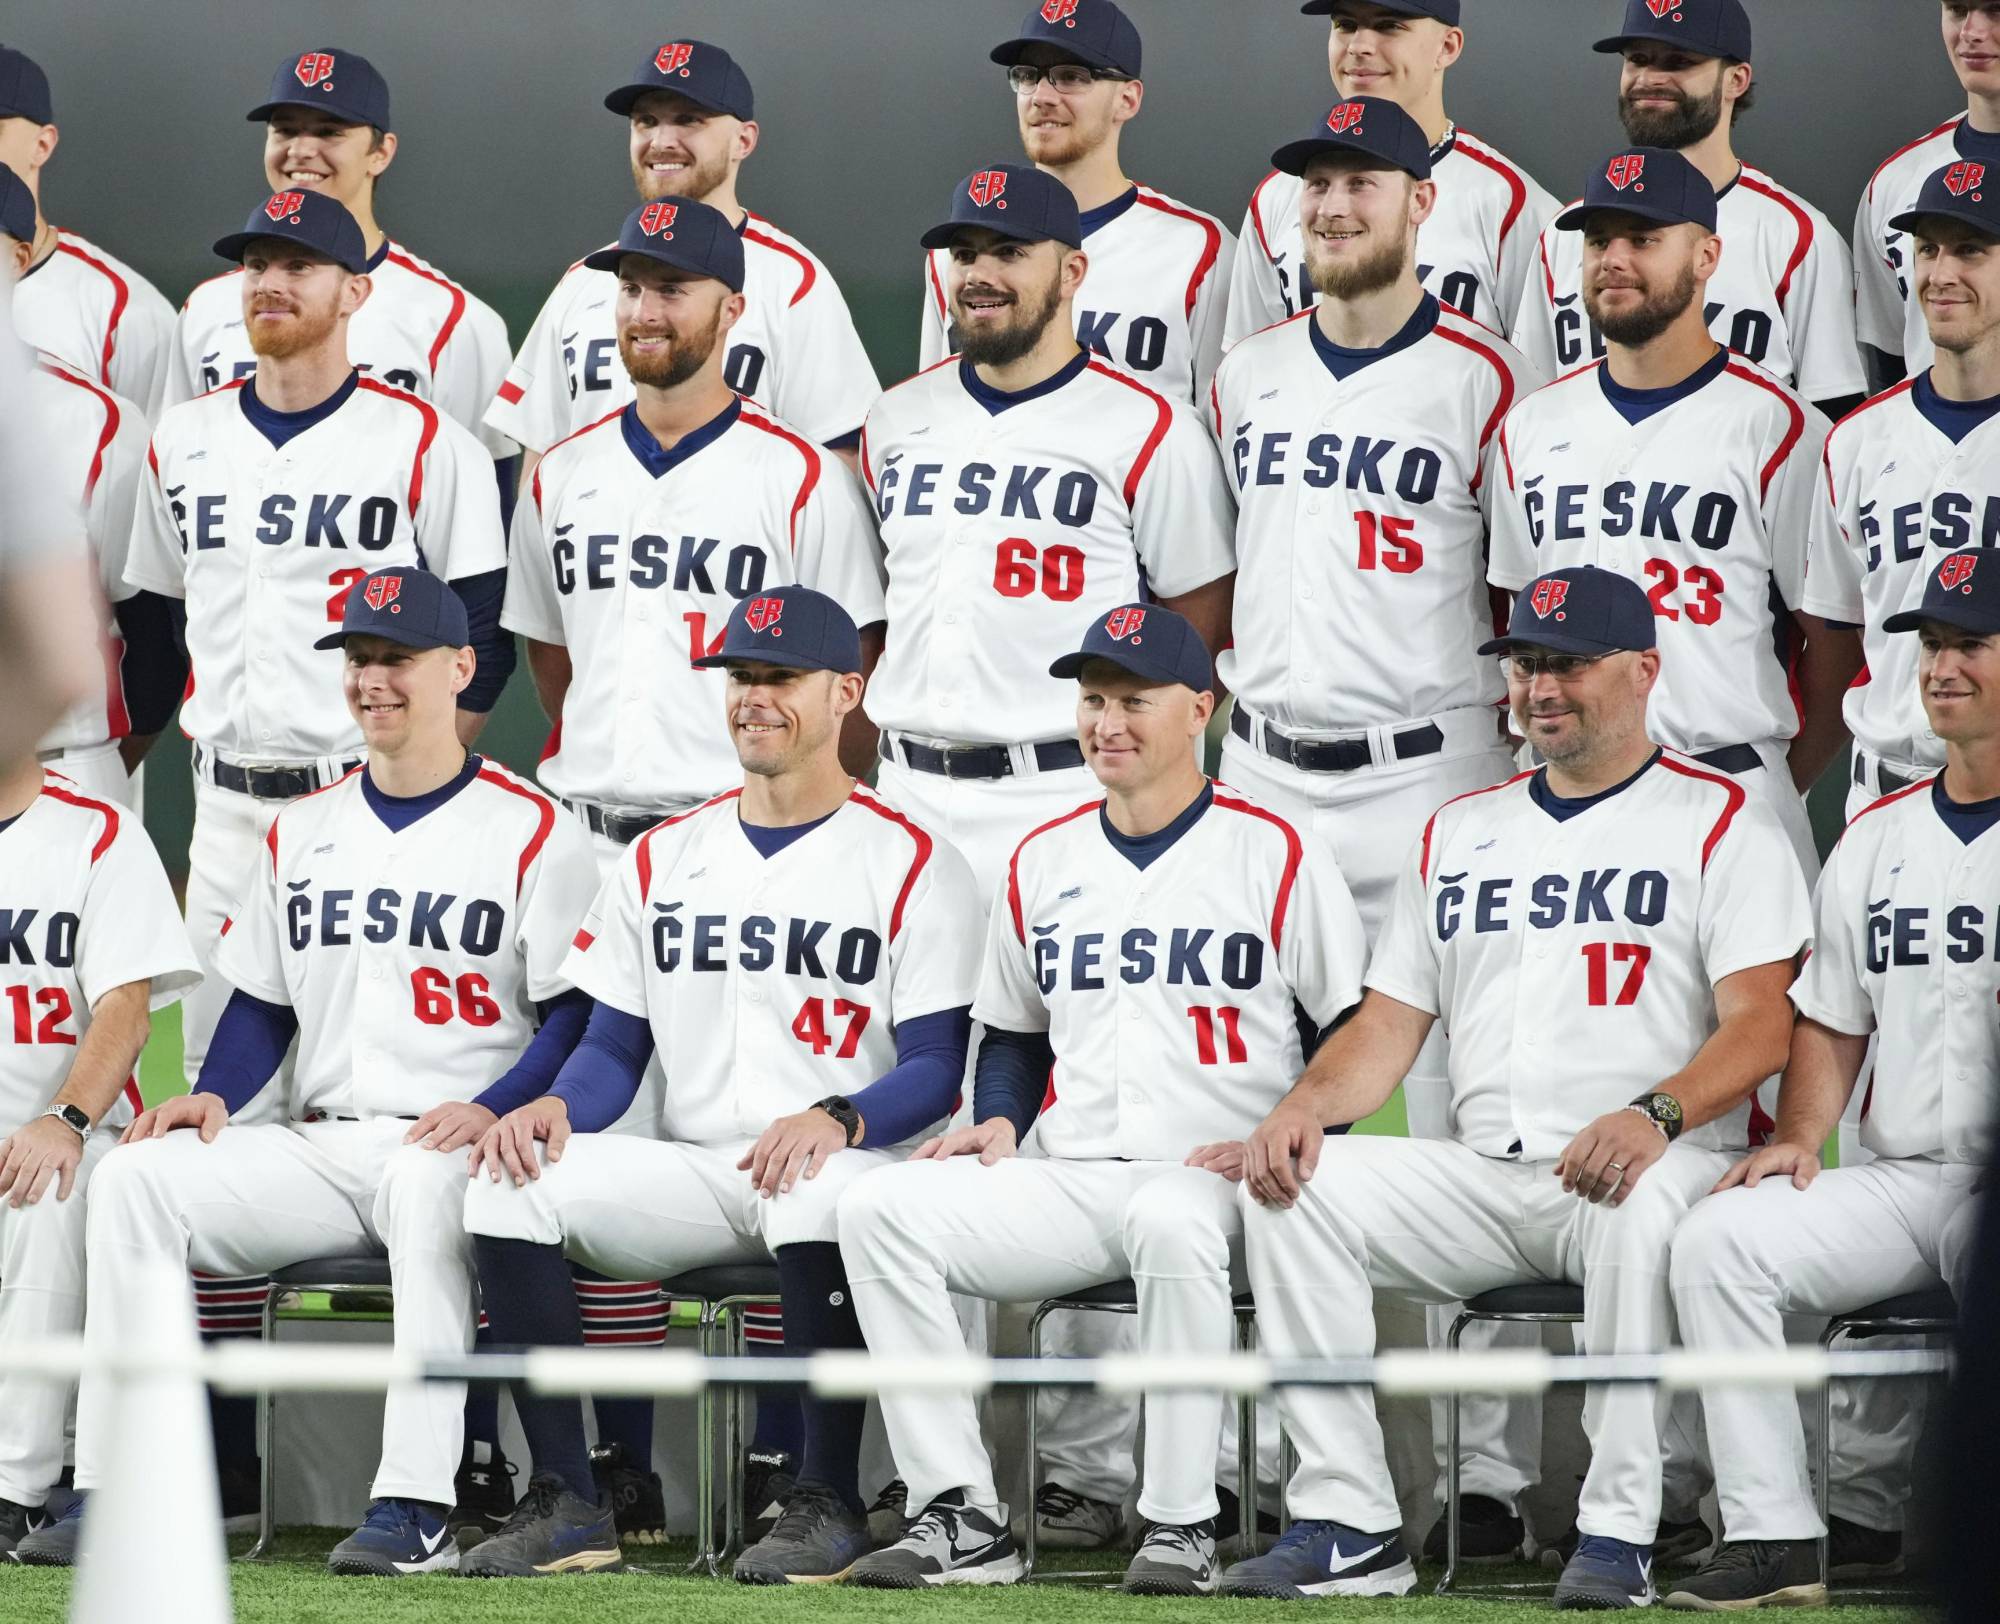 Softball Japan unveils new national team uniforms for Tokyo 2020 Olympic  Games - World Baseball Softball Confederation 